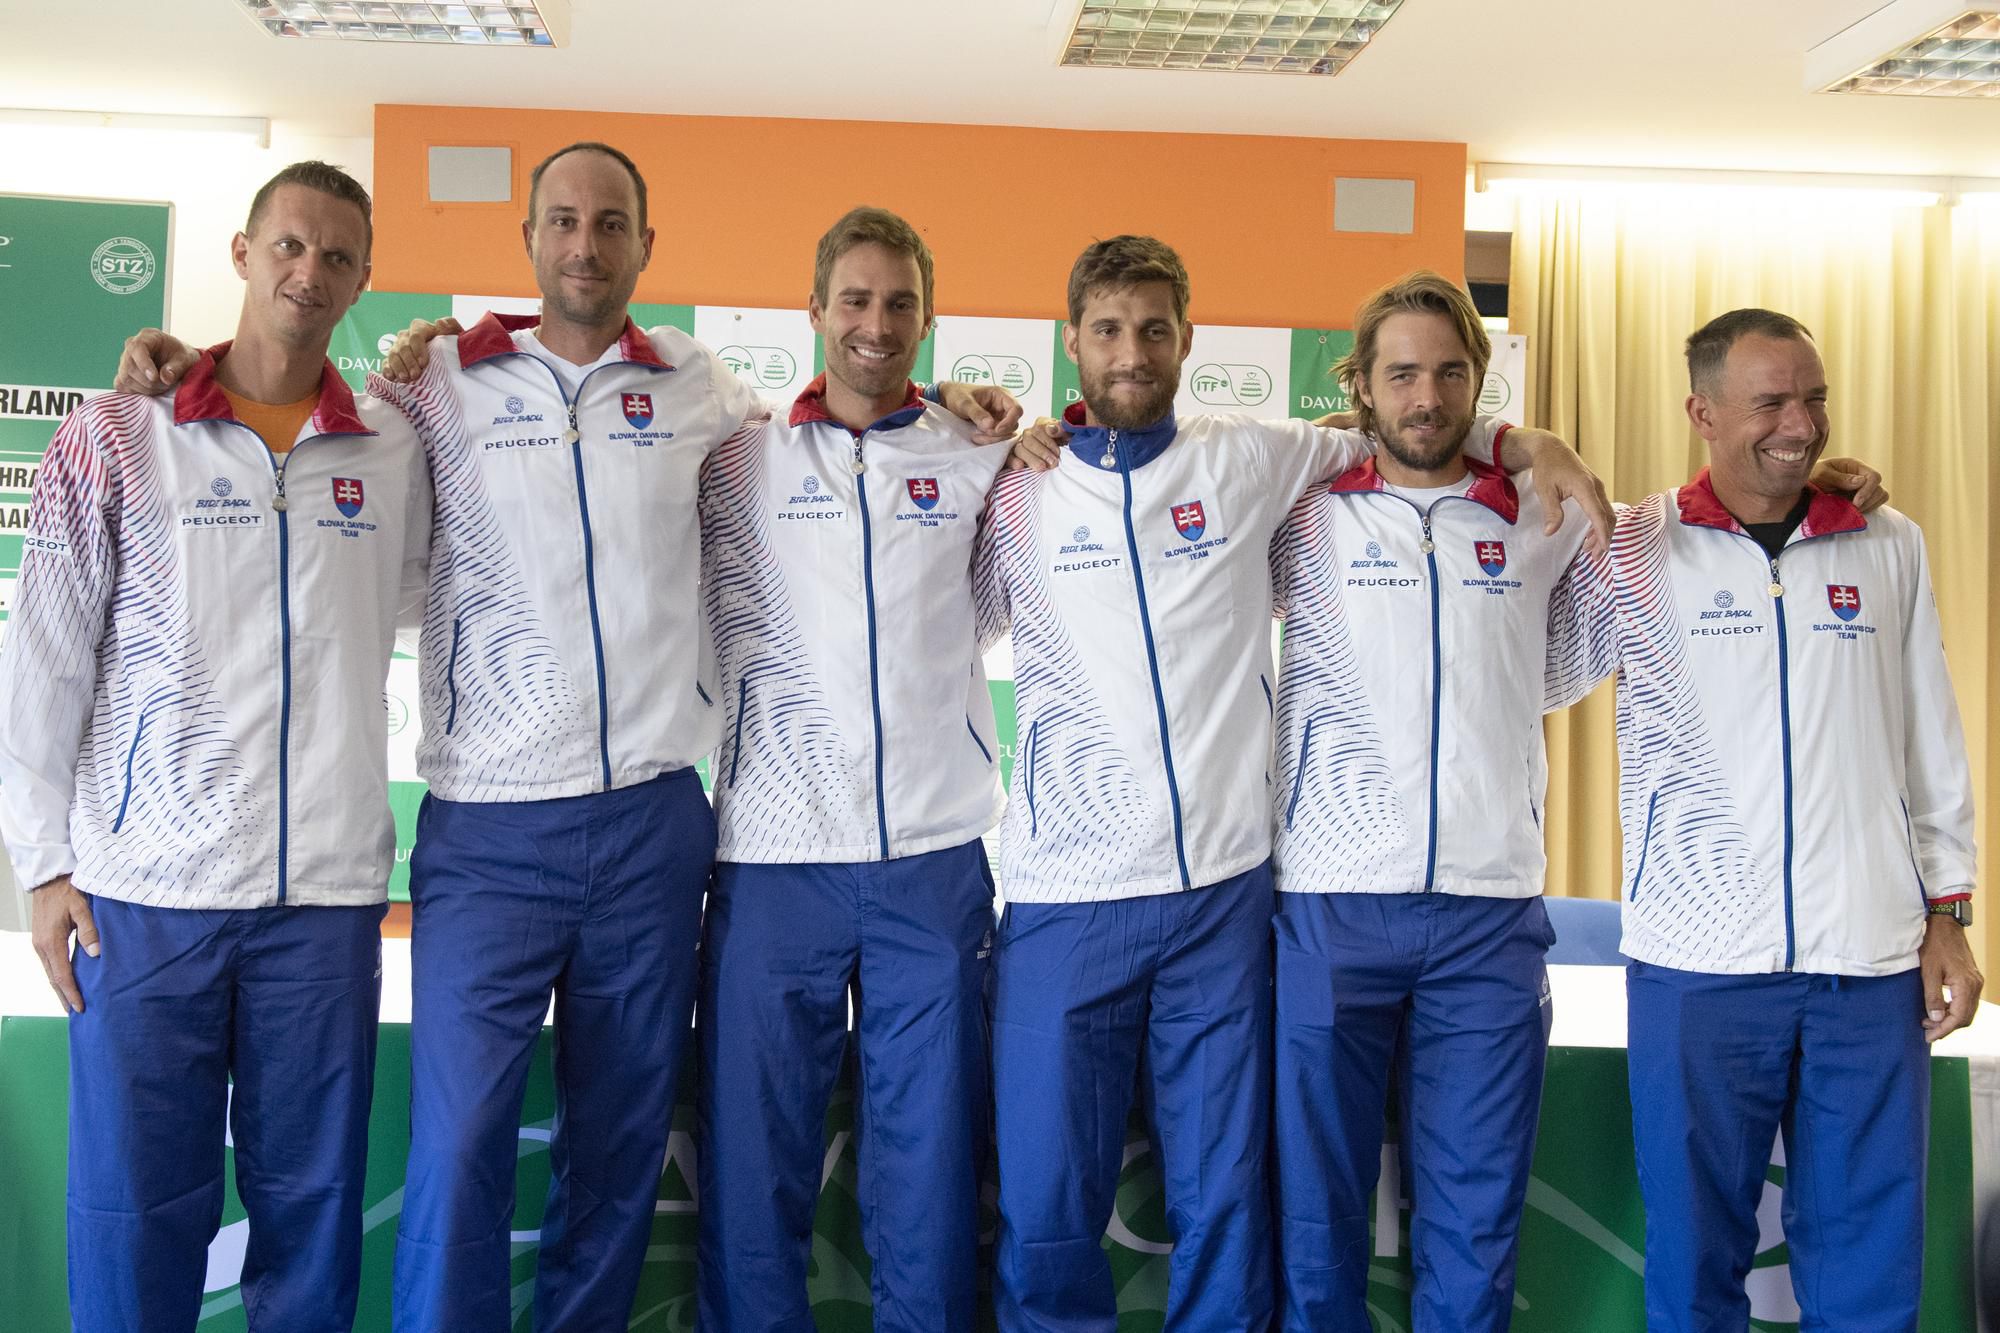 Sslovenský daviscupový tím Filip Polášek, Igor Zelenay, Norbert Gomboš, Martin Kližan, Andrej Martin a kapitán tímu Dominik Hrbatý.